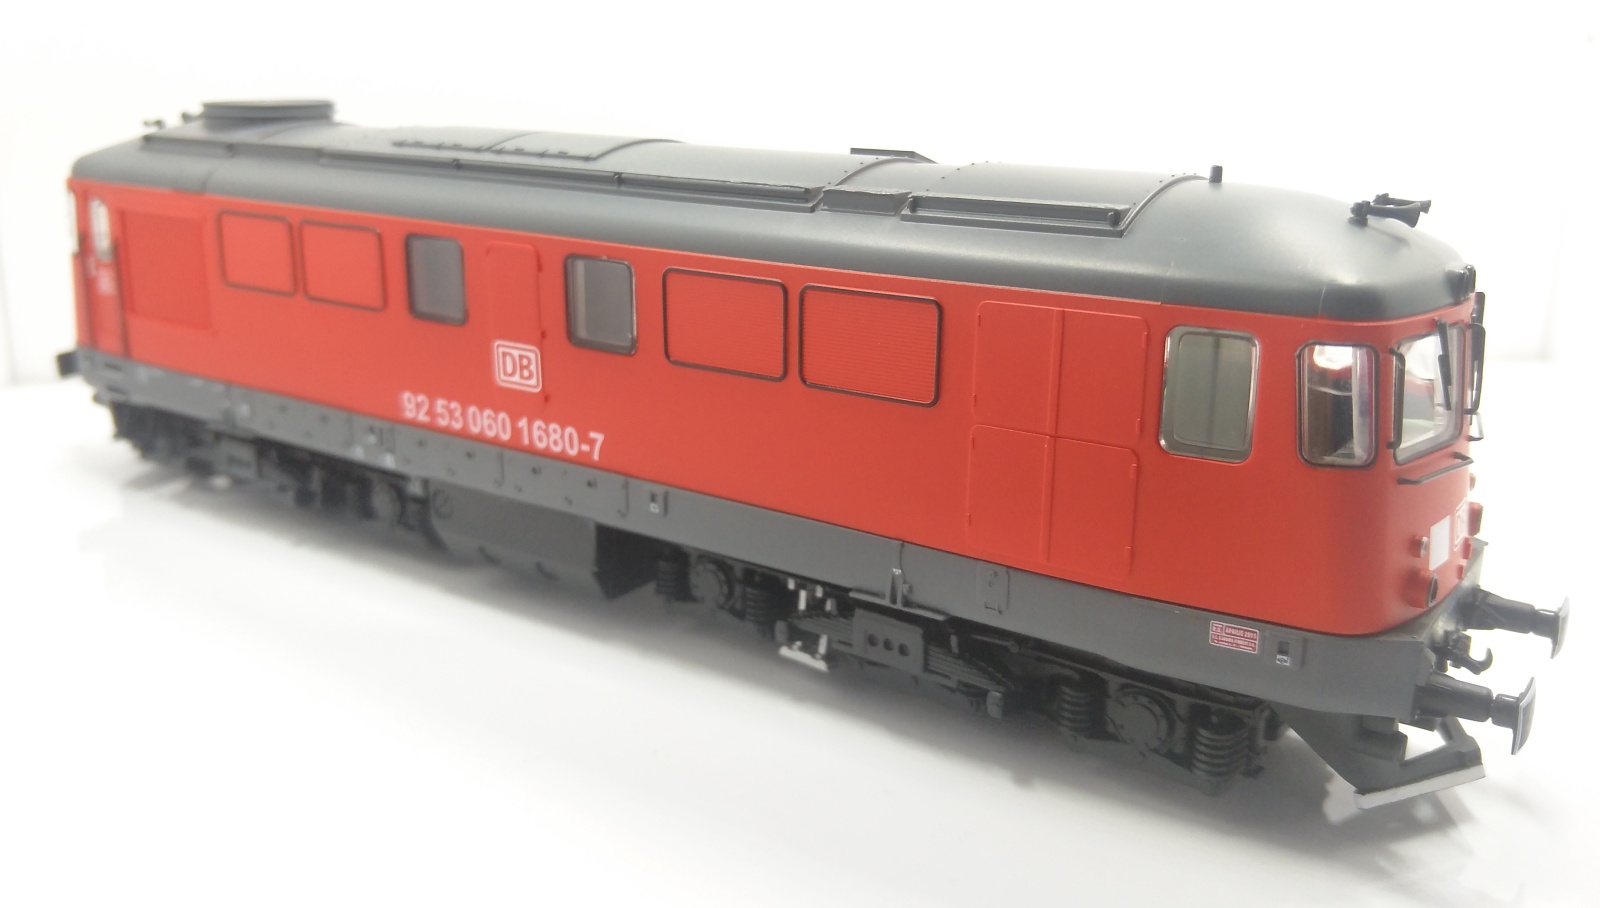 locomotiva-diesel-060-DA-DB-Schenker-Ro-albert-modell-060001-d.jpg